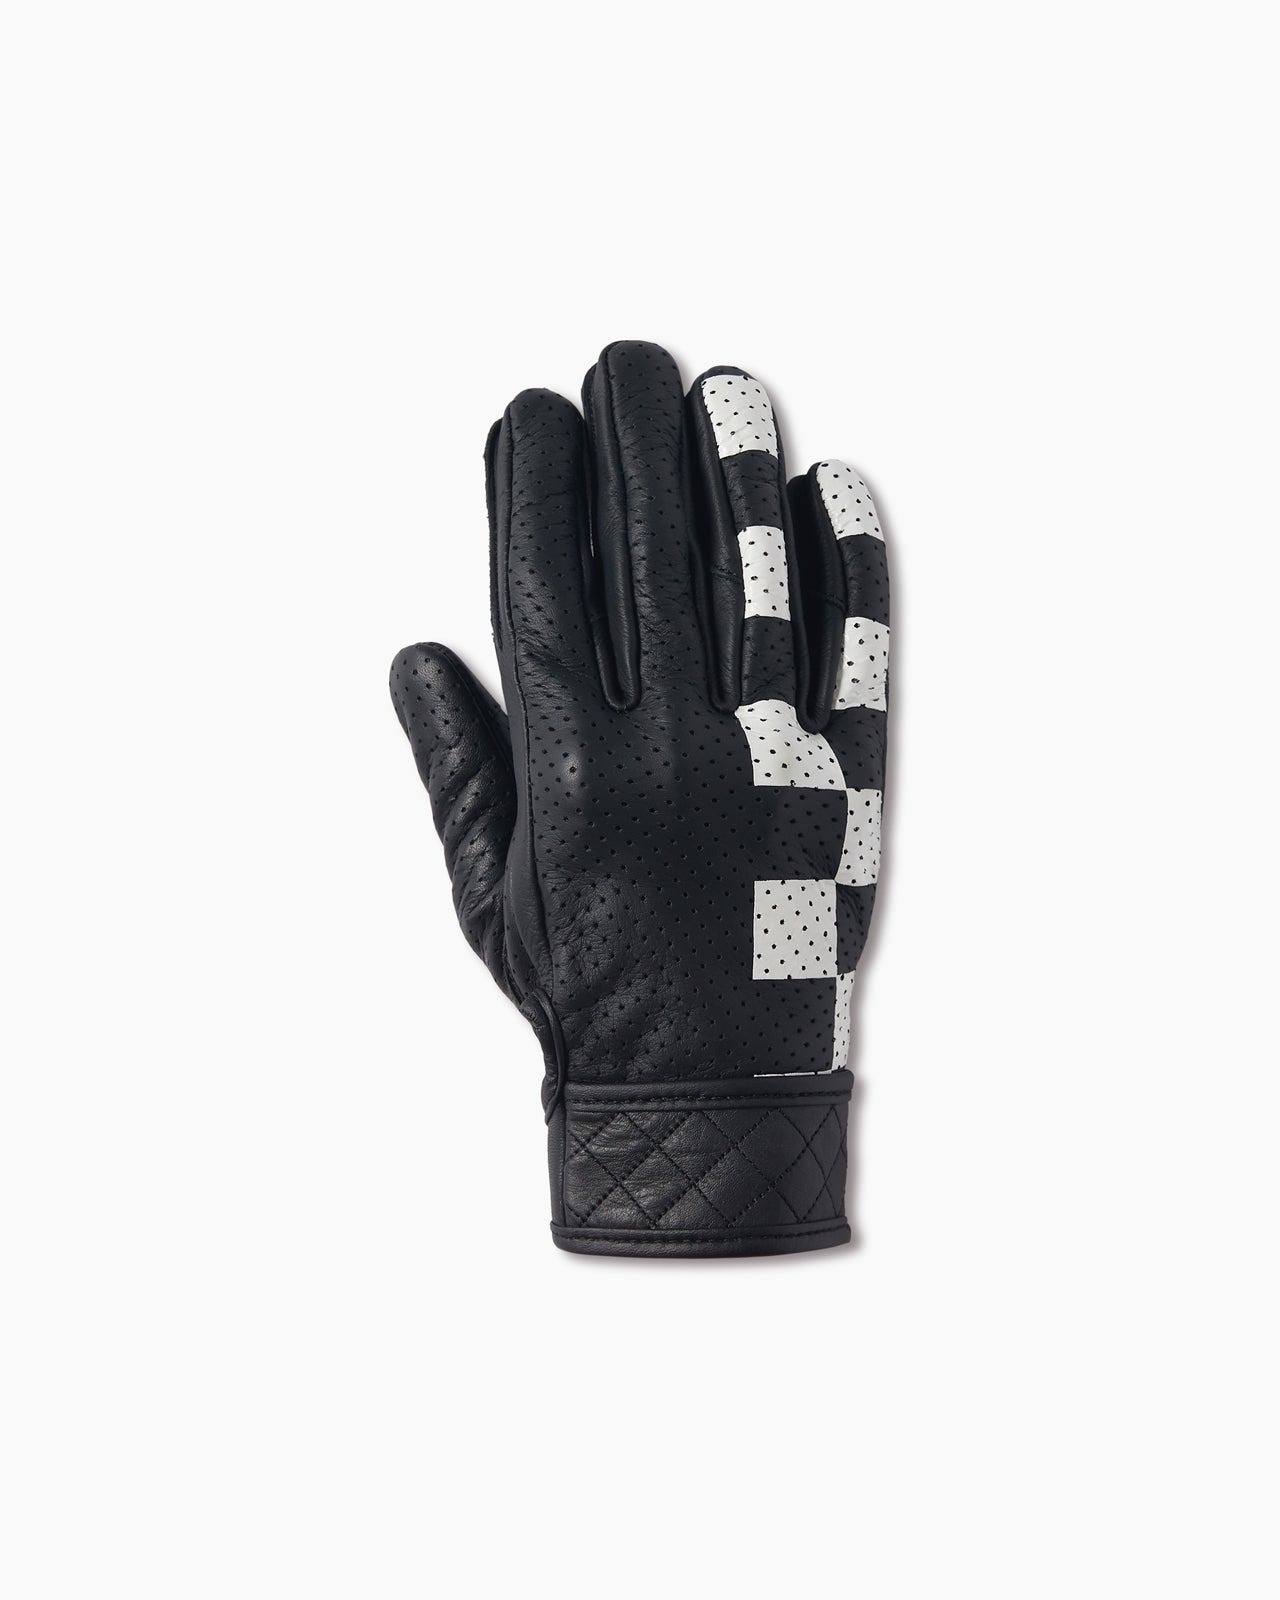 ATWYLD Orbital Gloves - Black